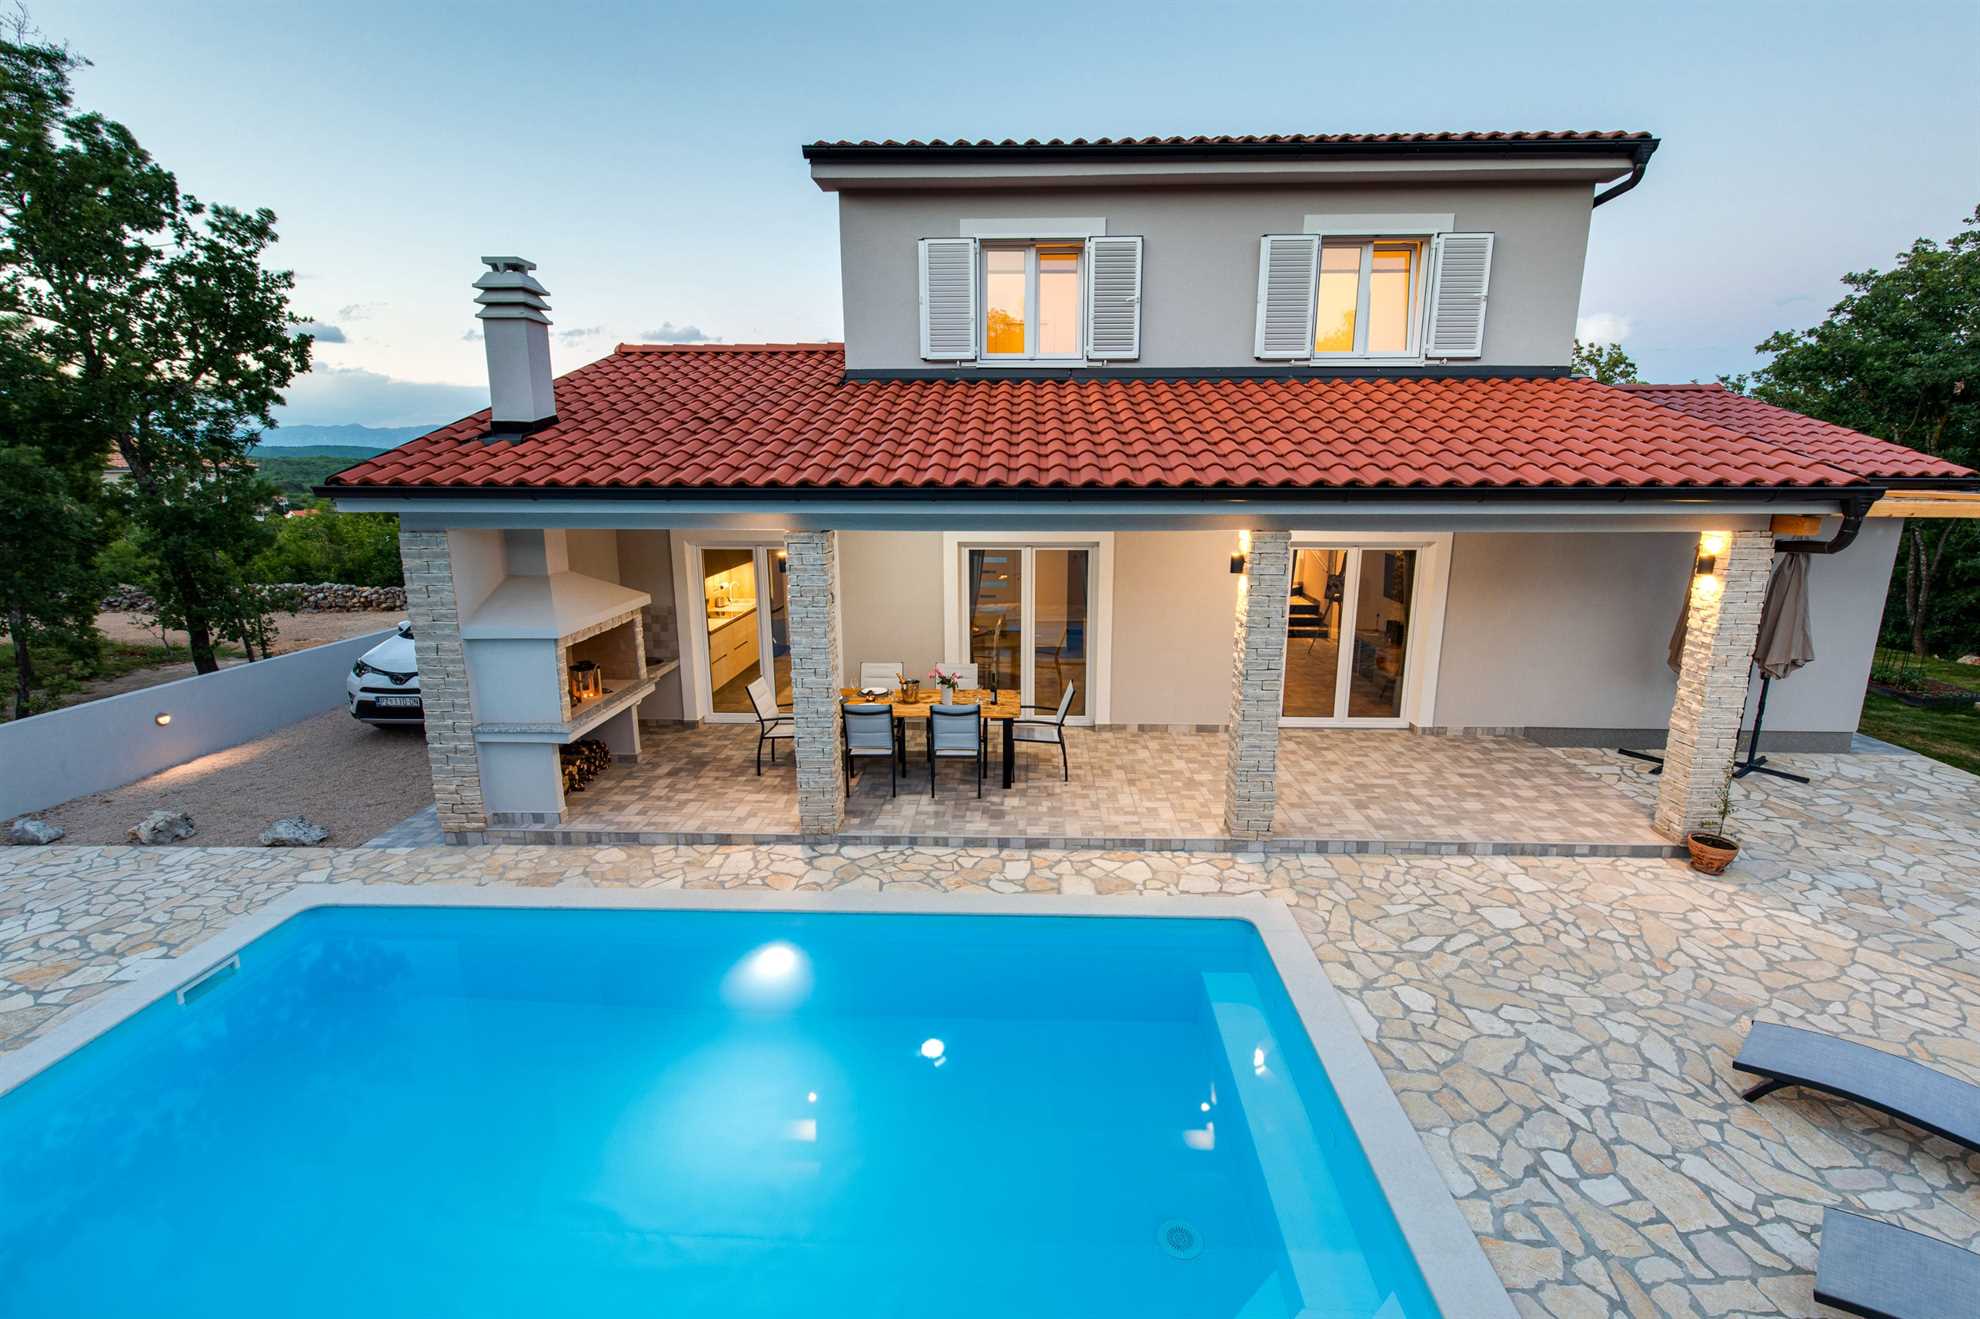 Villa SANDRINA with a heated pool and spacious yard